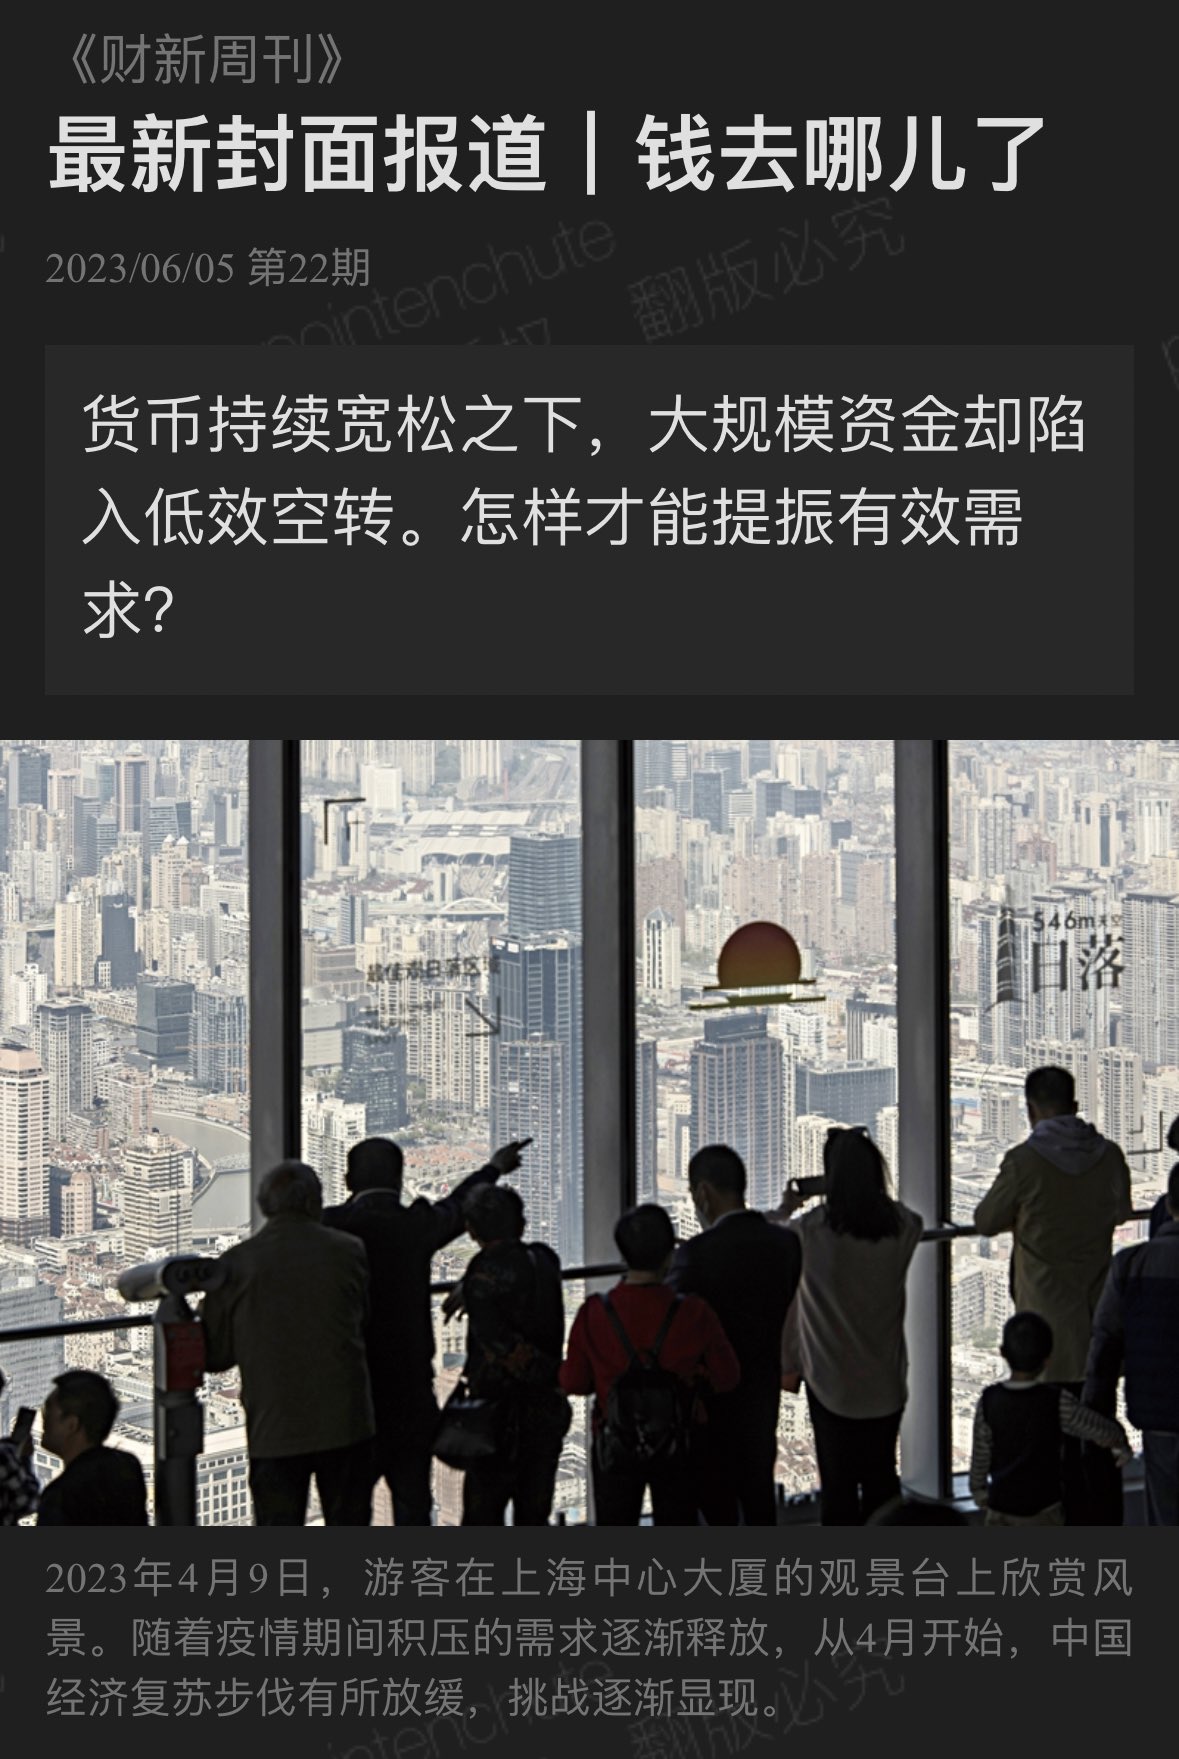 Steve Hou “CONSUME LESS!” on Twitter: "@NewsCaixin cover story